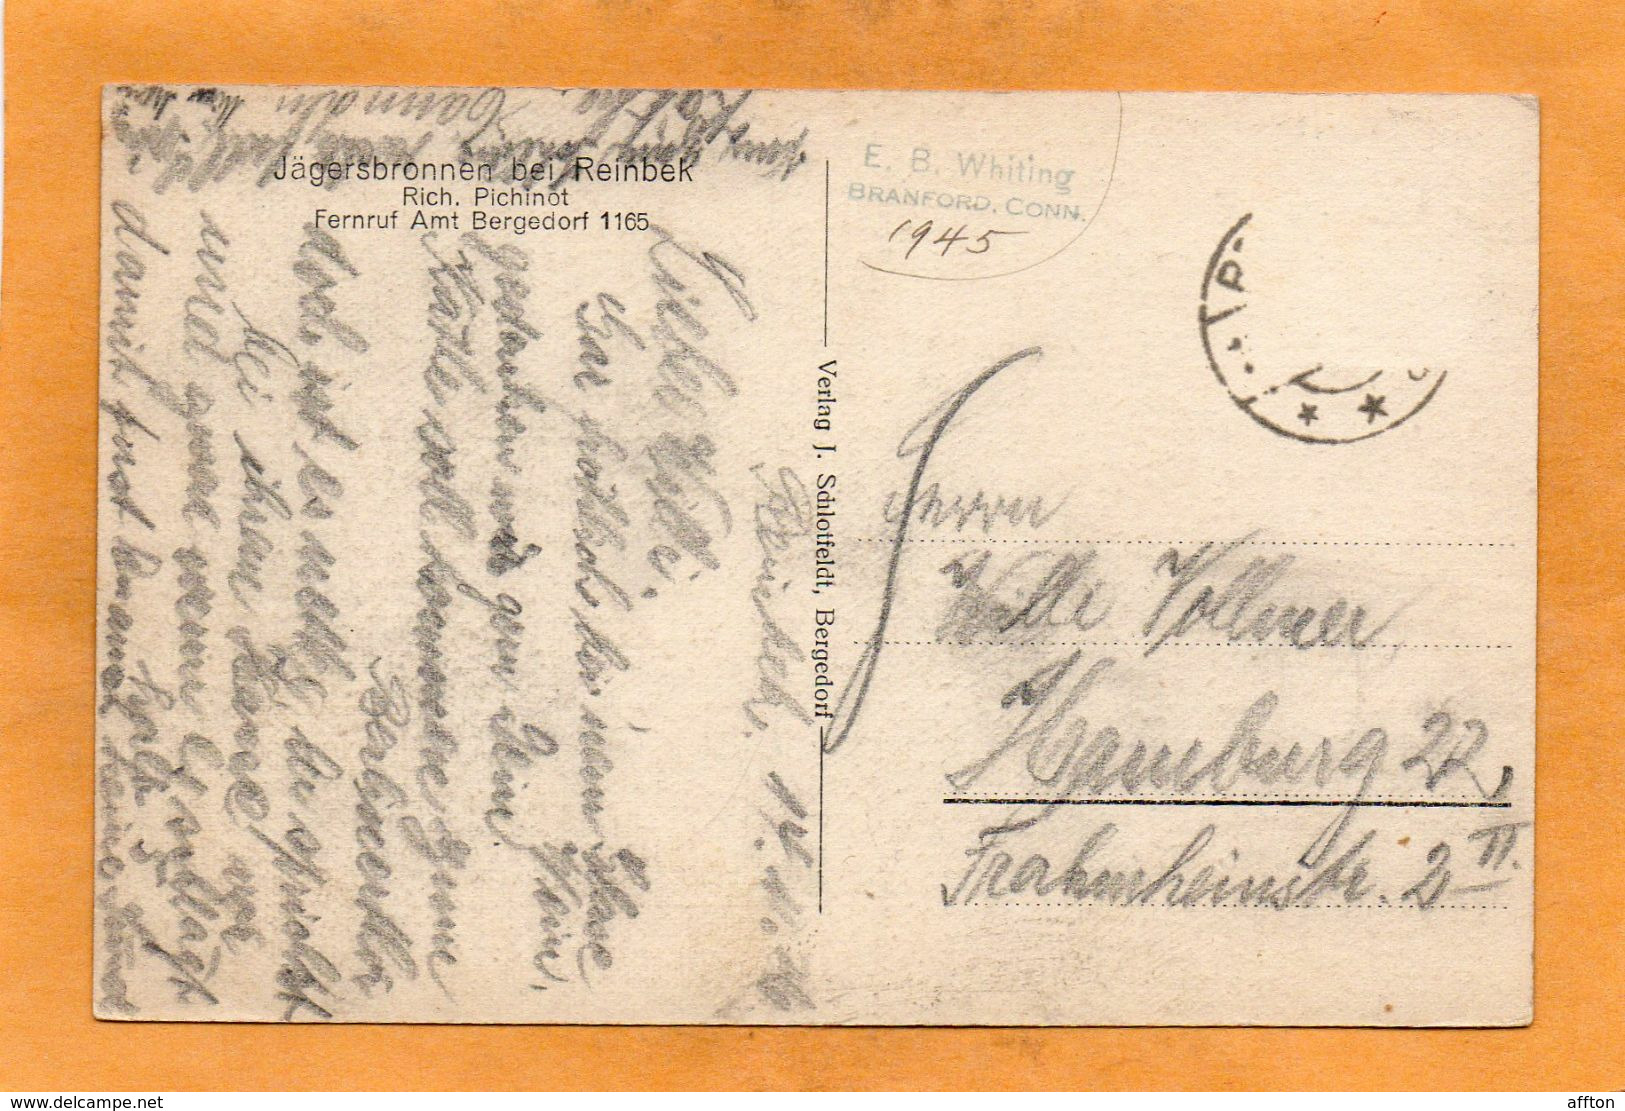 Jagersbronnen Reinbek Germany 1910  Postcard - Reinbek